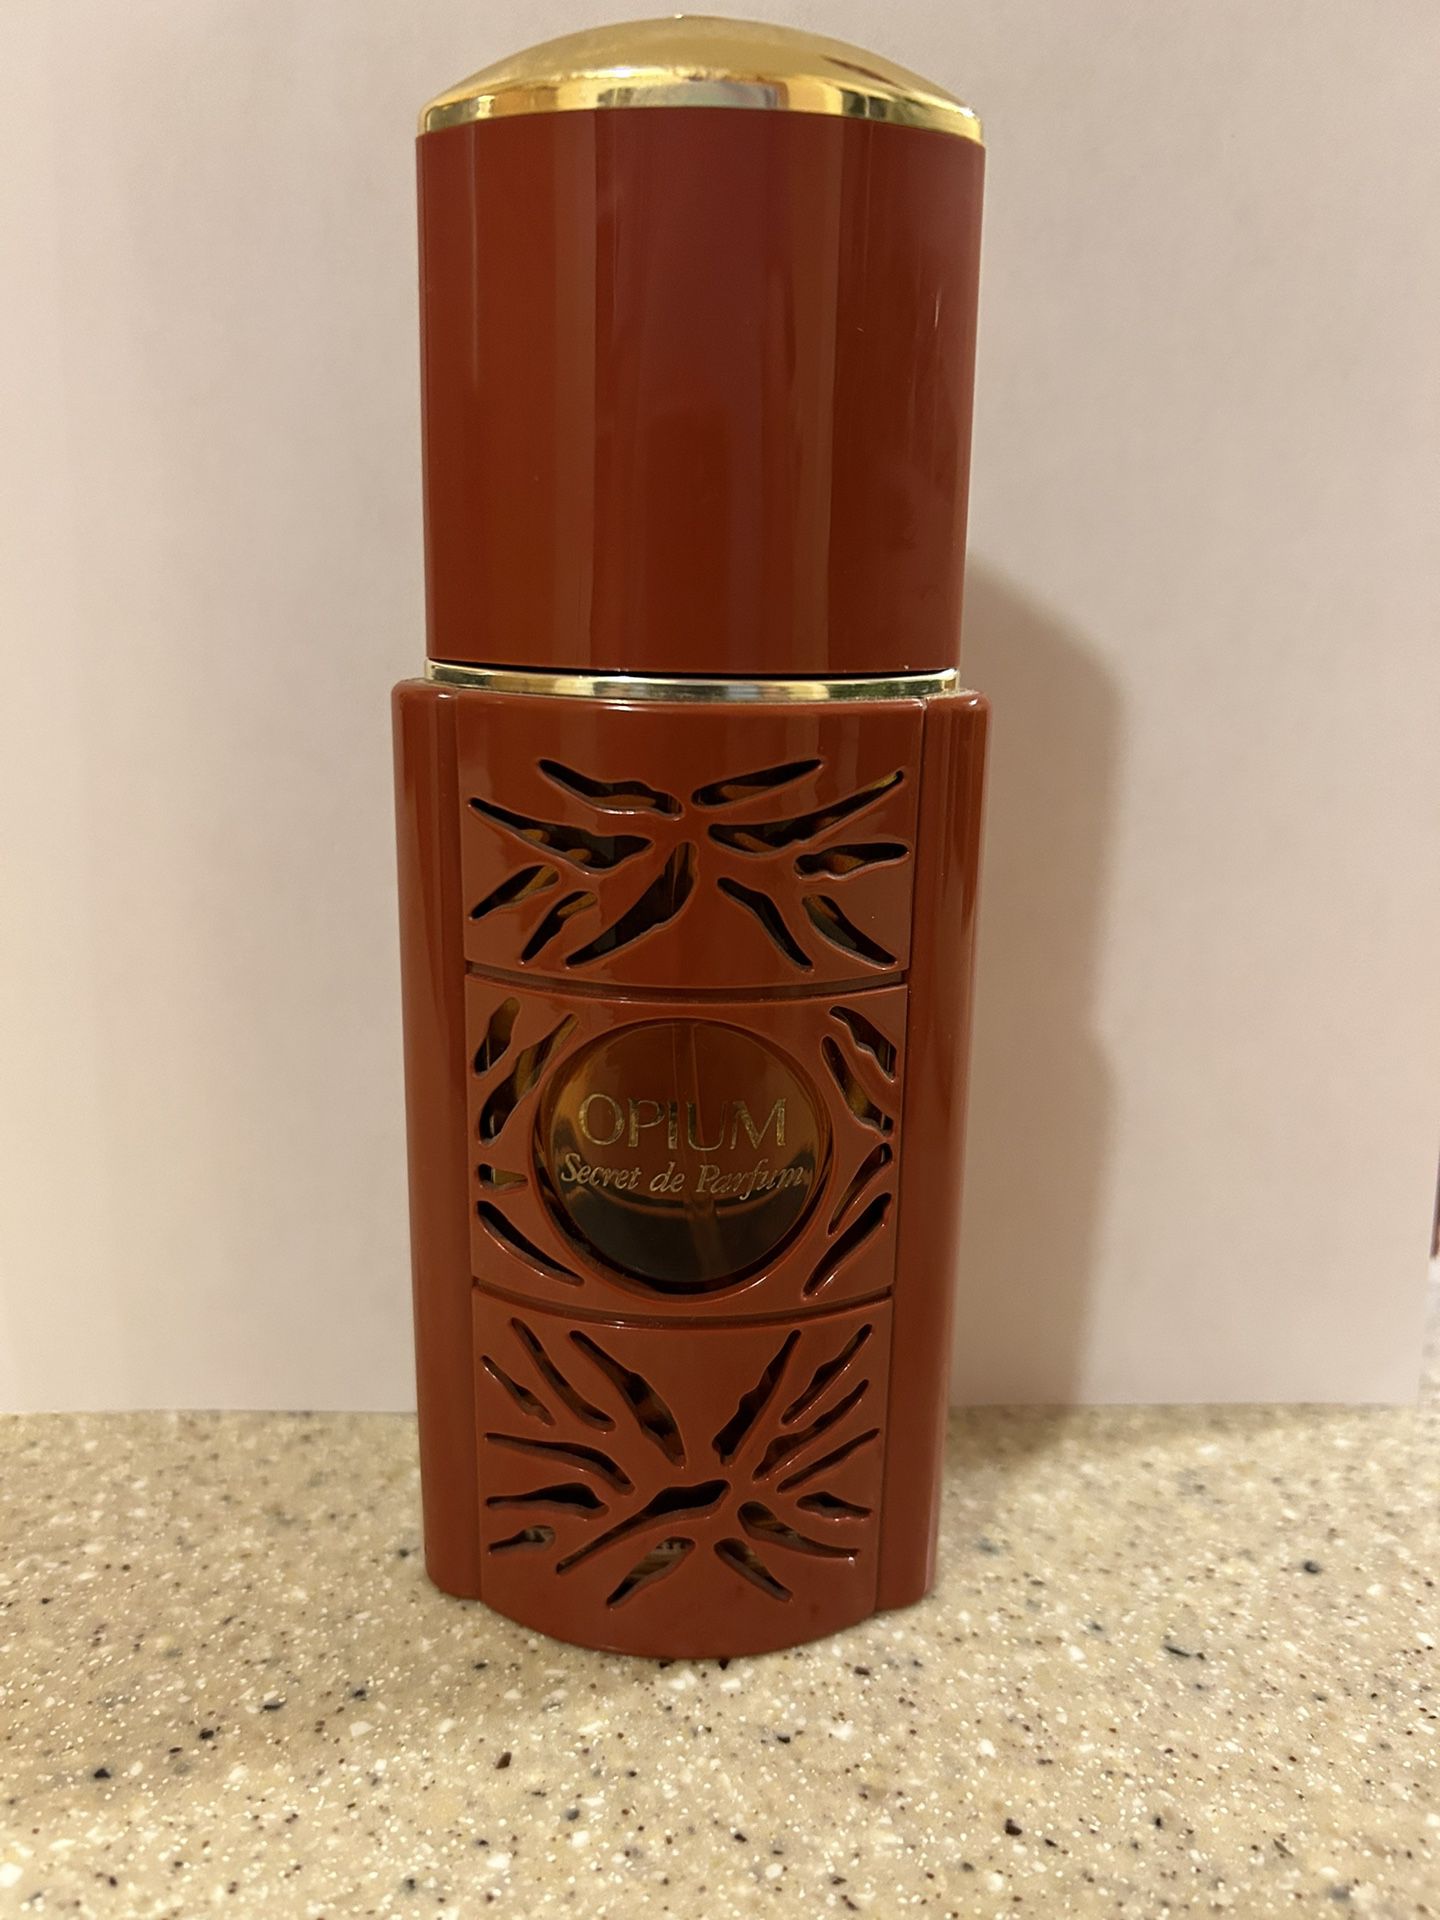 Rare  OPIUM SECRET DE PARFUM Perfume Spray 1.6 fl oz / 50 ml by YSL 98% Full